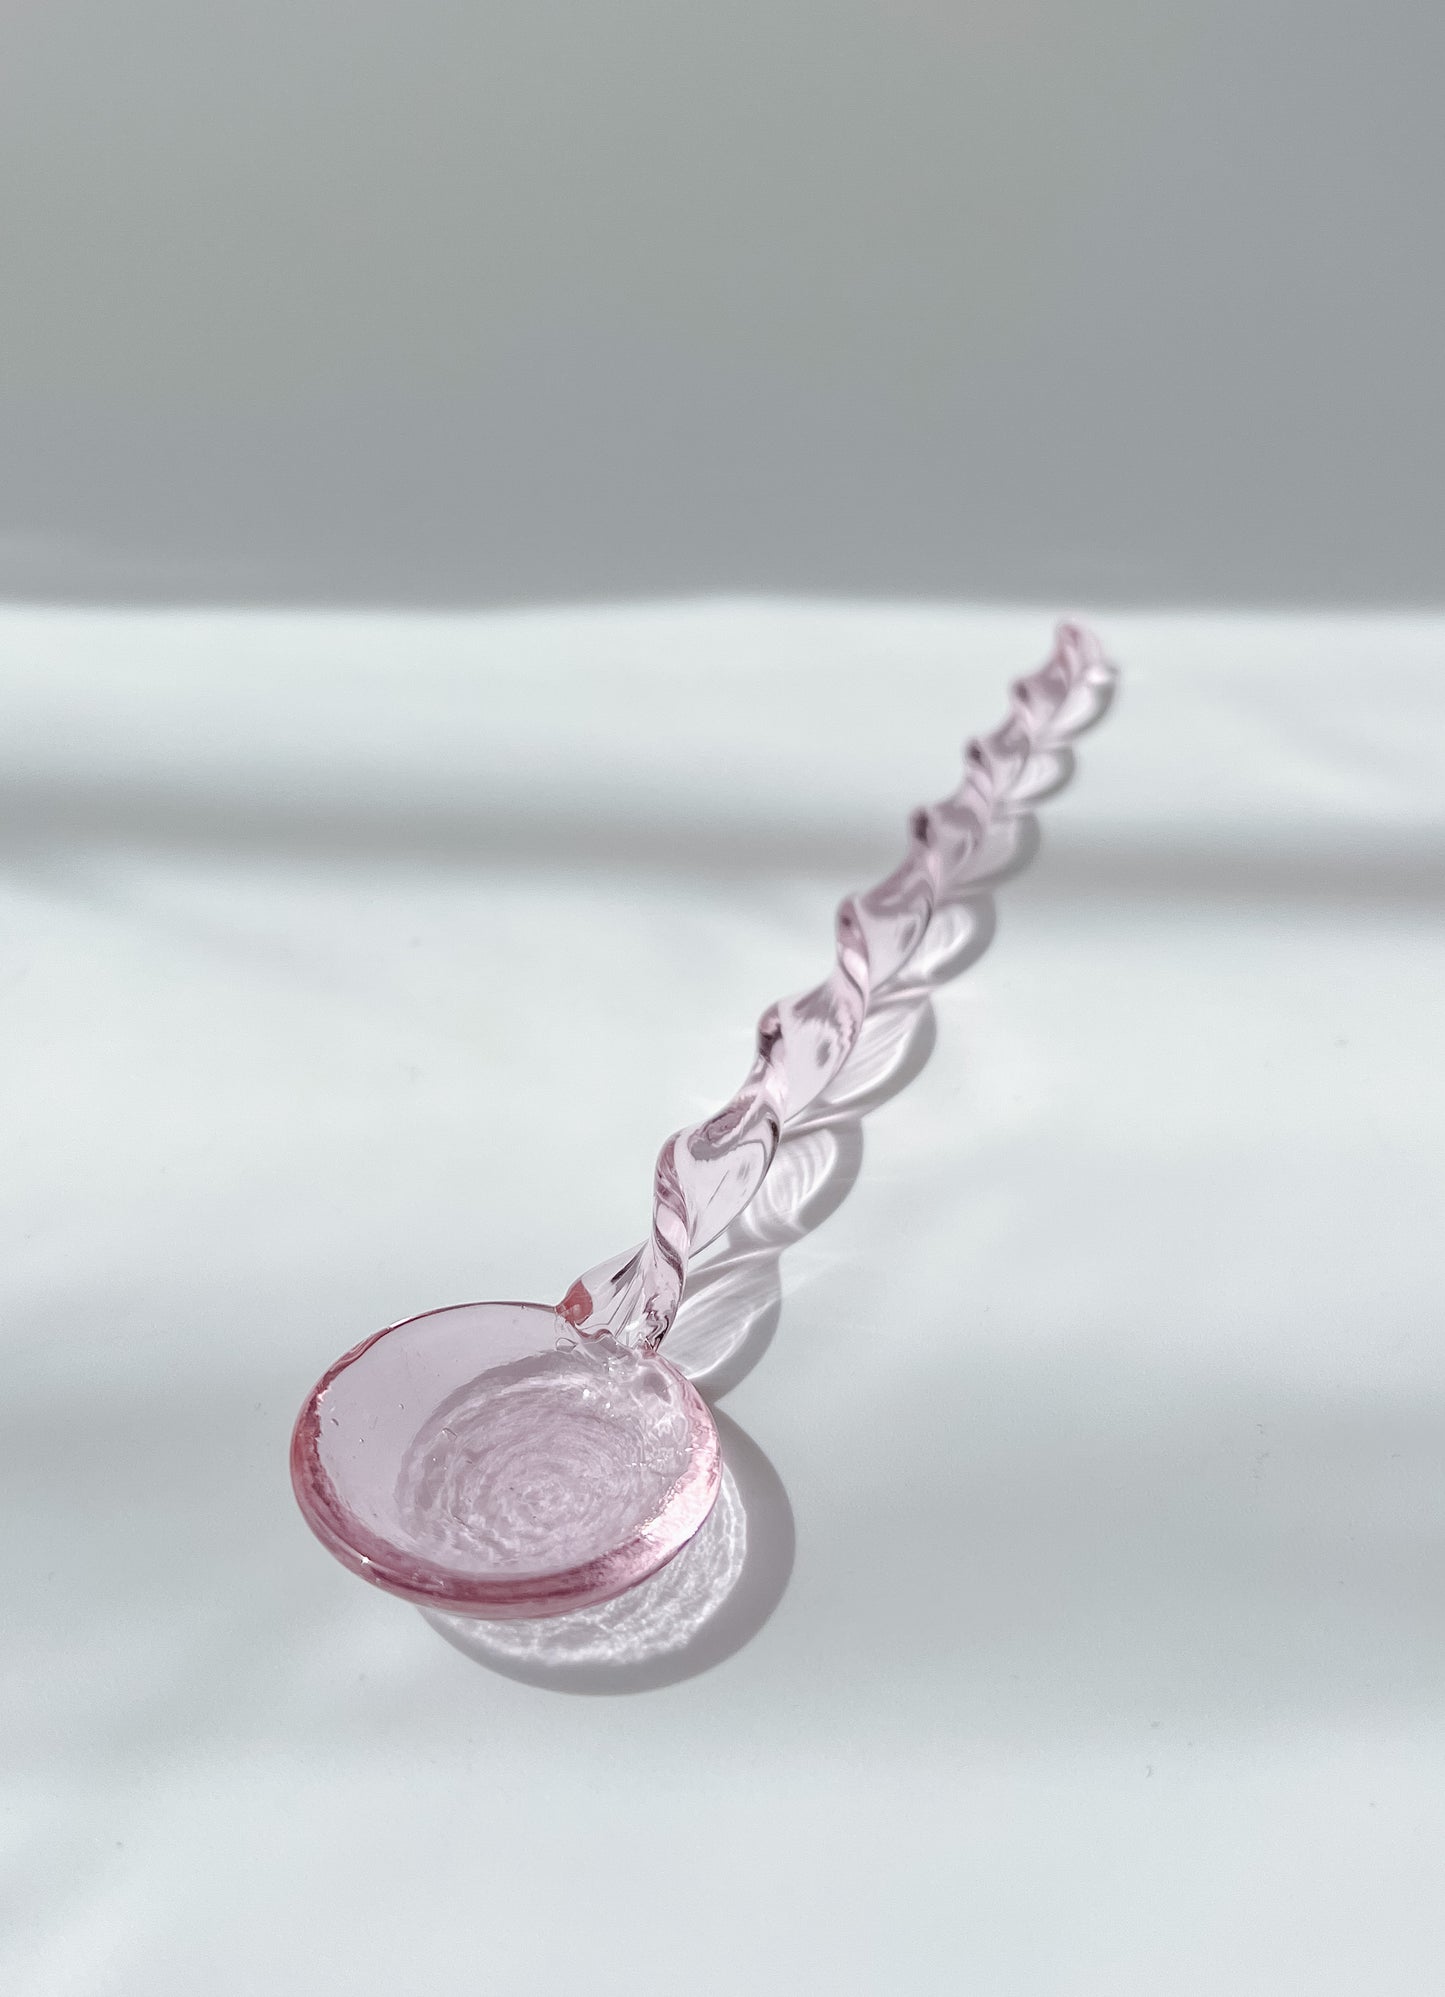 Sweet Sensation | Twisted glass spoon